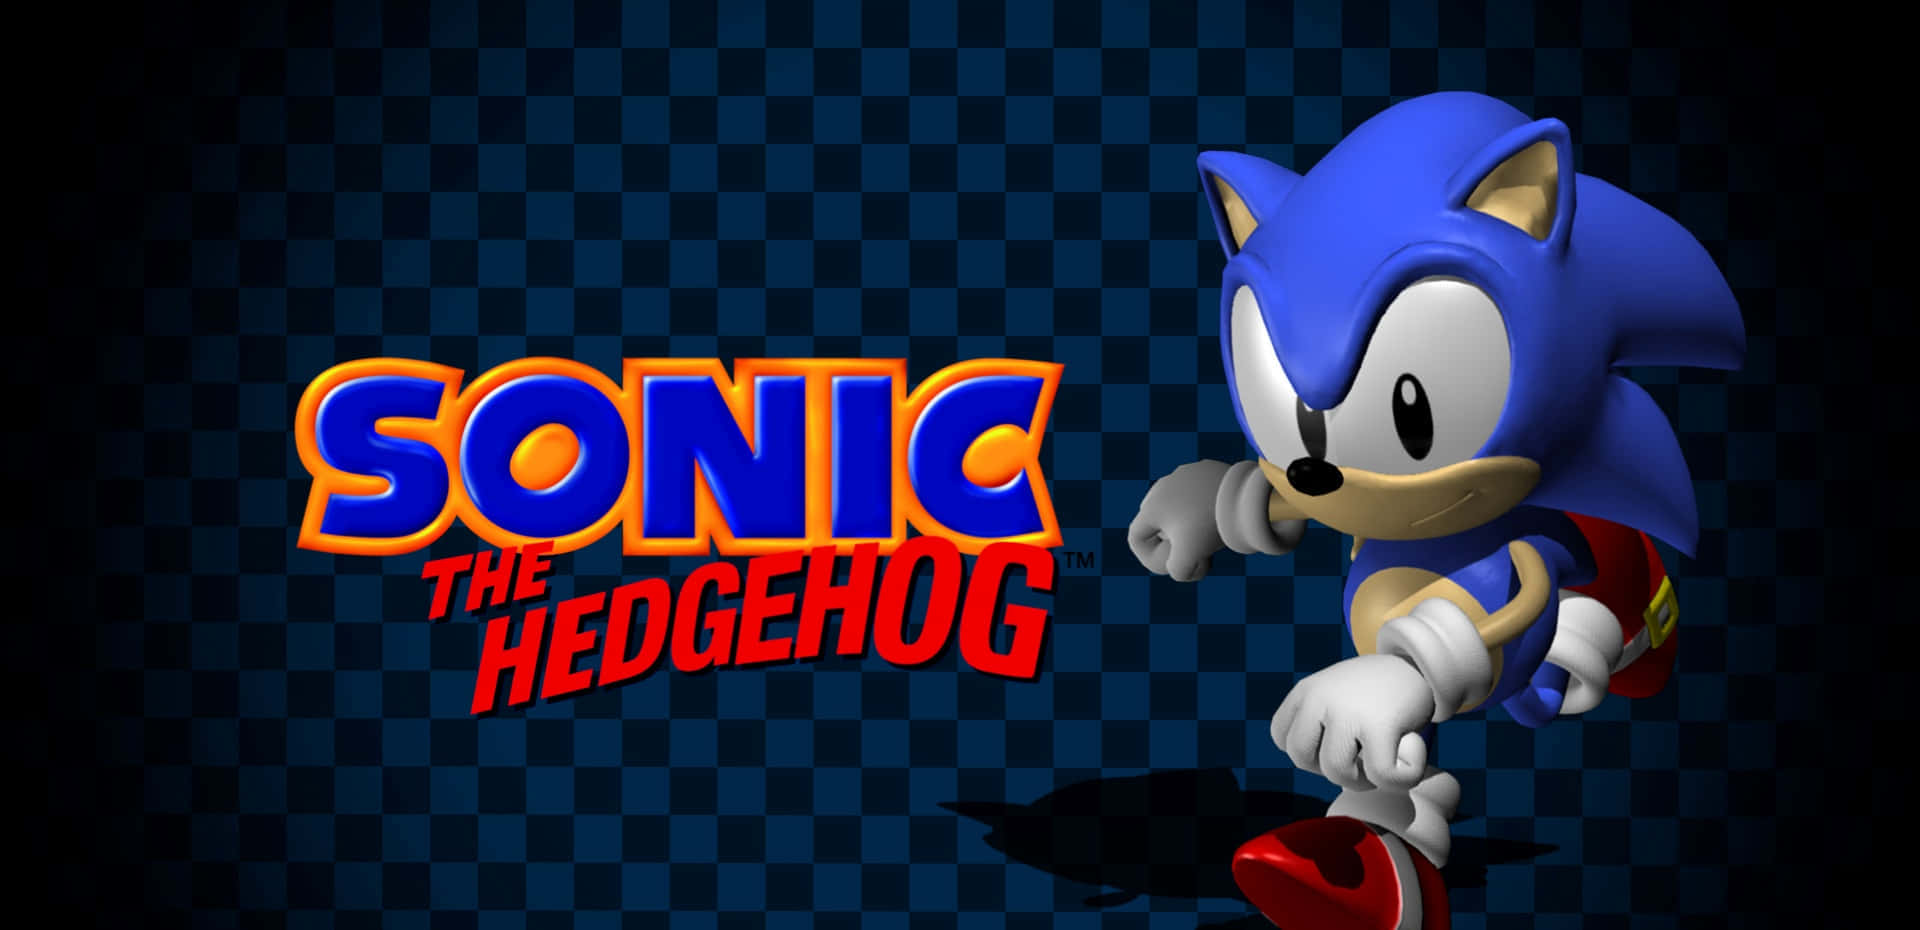 Classic Sonic The Hedgehog Speeding Through A Retro Game World Wallpaper